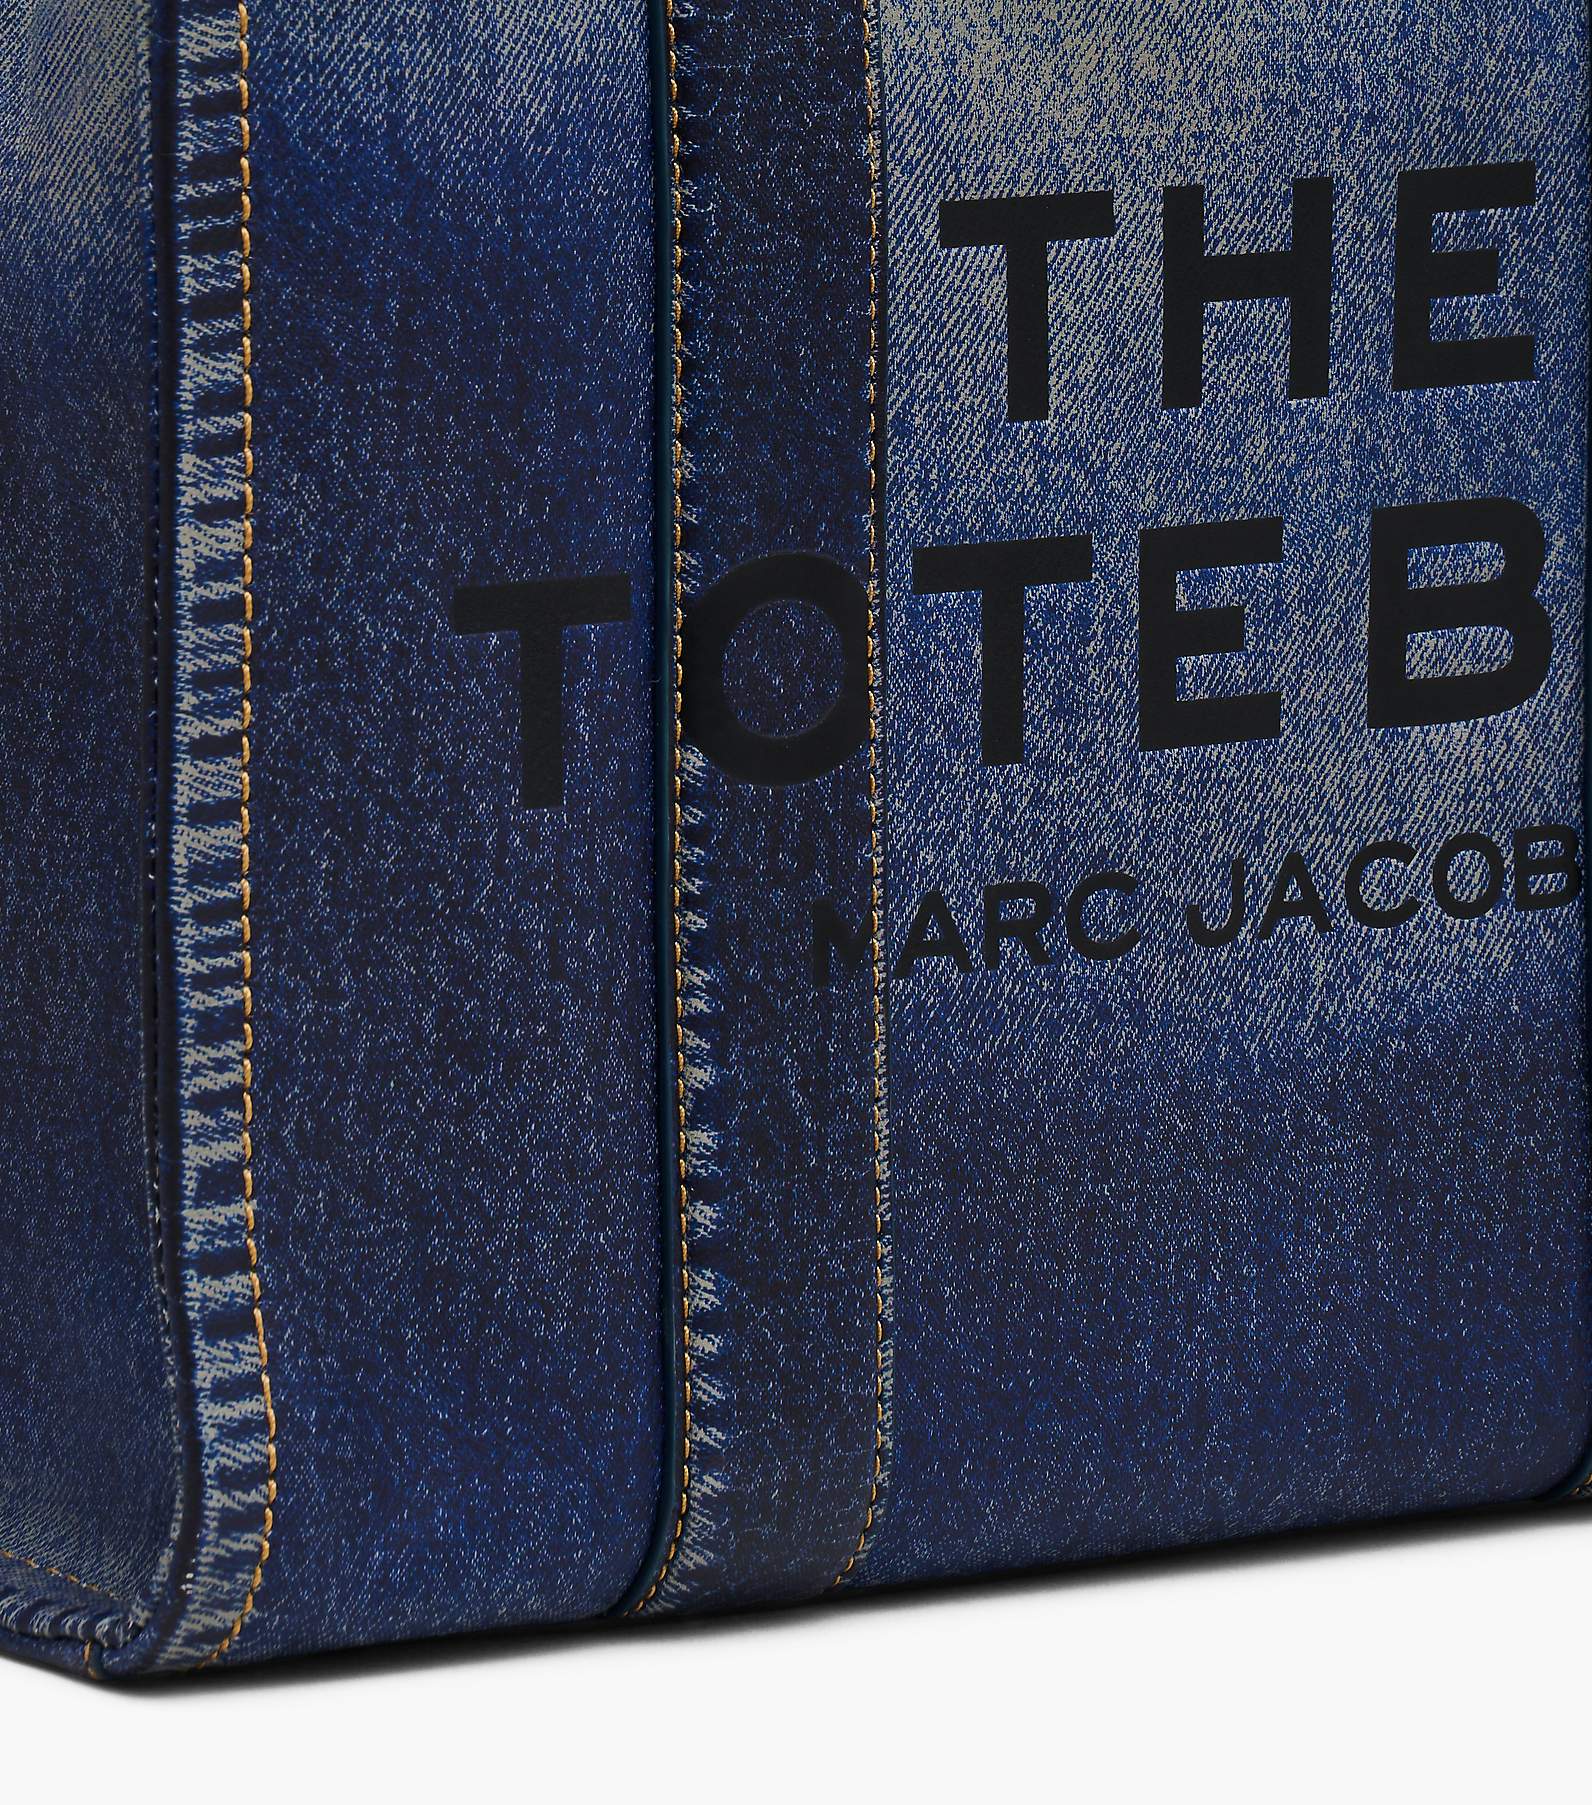 Marc Jacobs The Denim Medium Tote Bag in Blue Denim